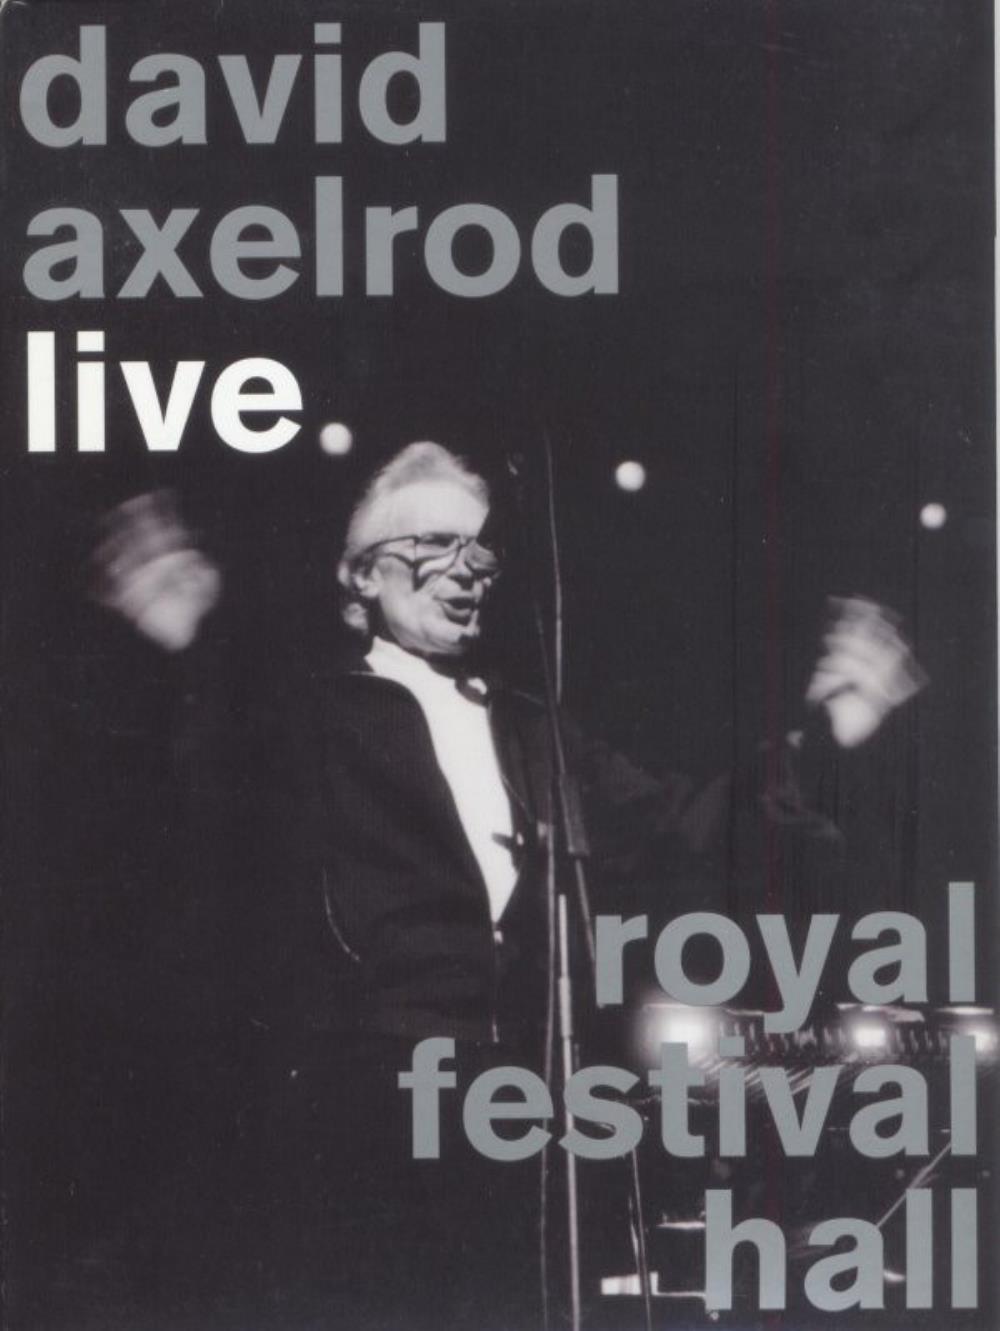 David Axelrod Live Royal Festival Hall album cover